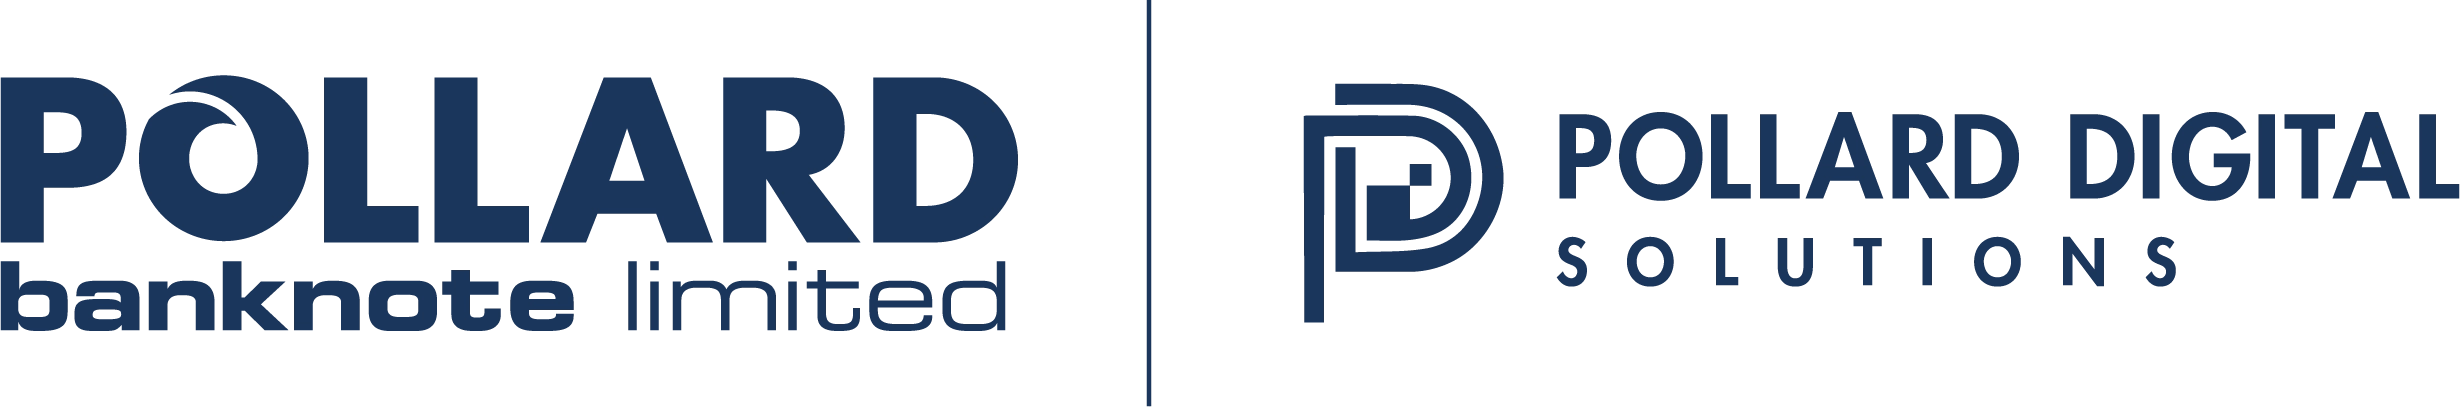 Pollard Banknote and Pollard Digital Logo